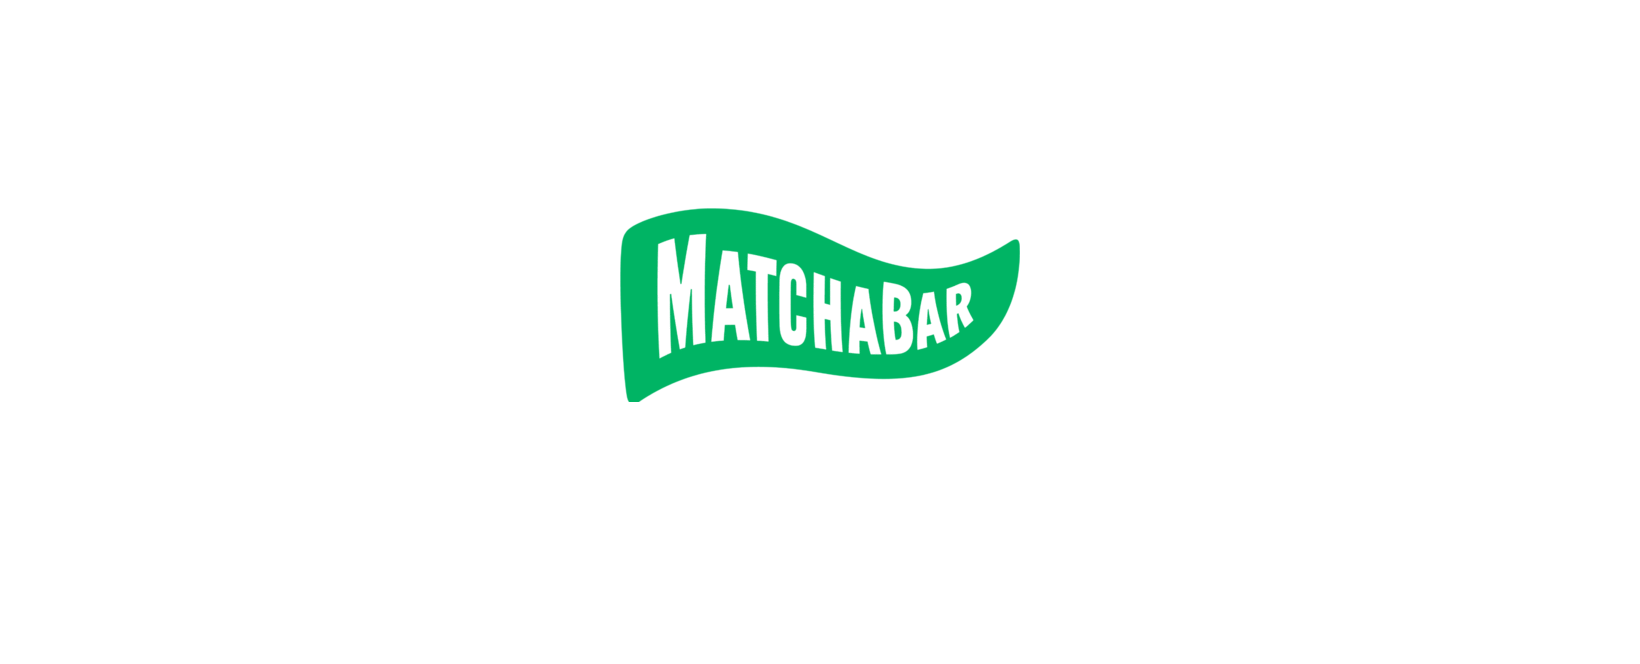 MatchaBar Discount Code 2022